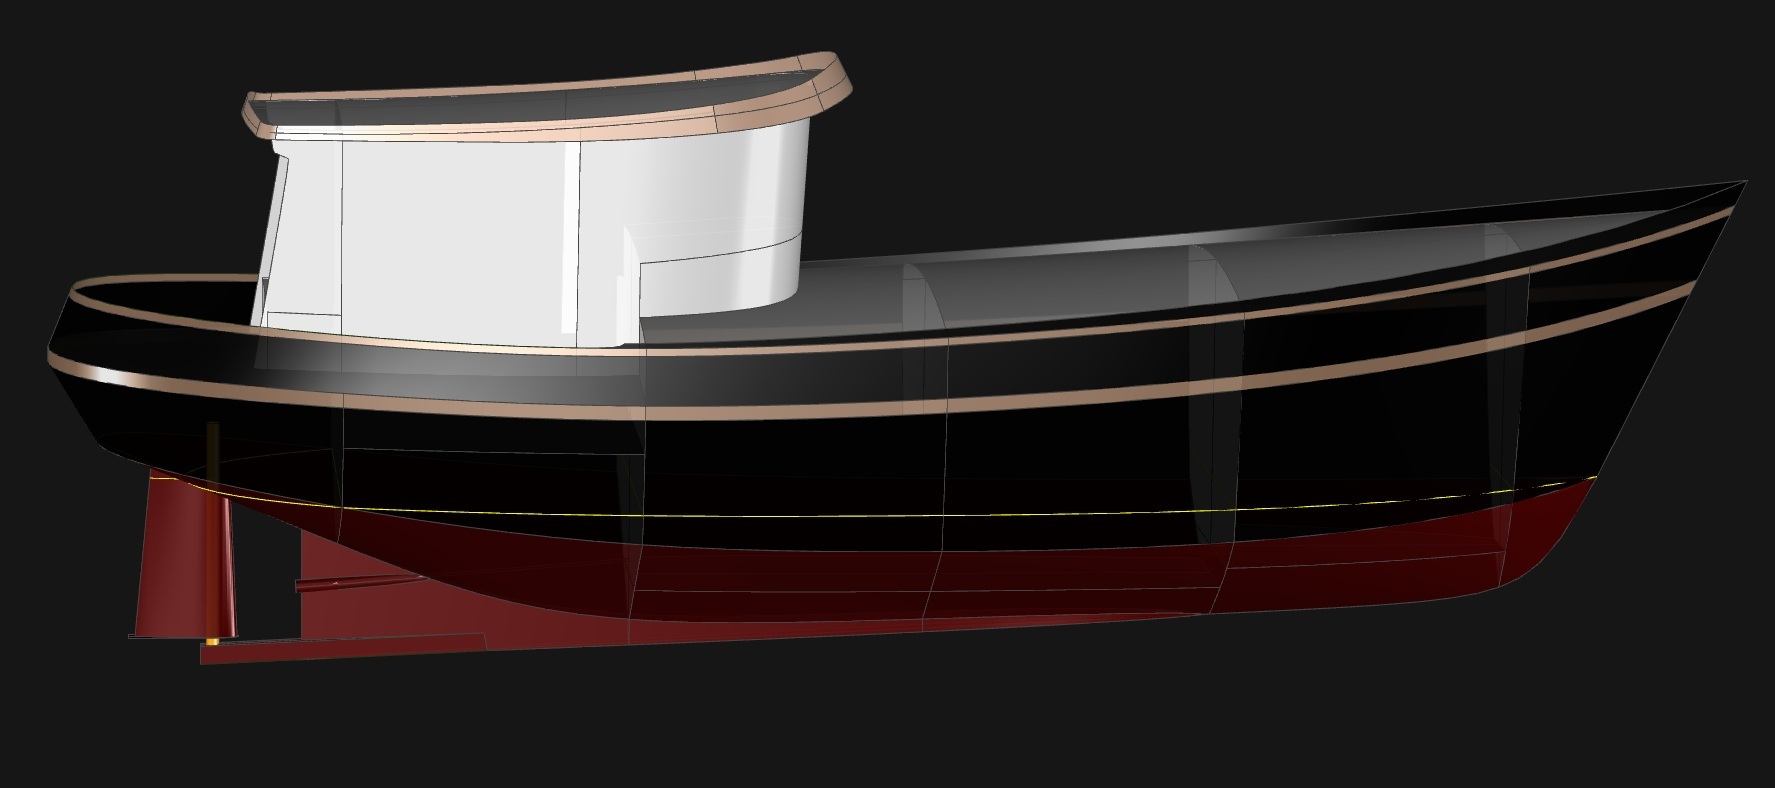 Far Horizon 40 - A Trawler Yacht by Kasten Marine Design, Inc.